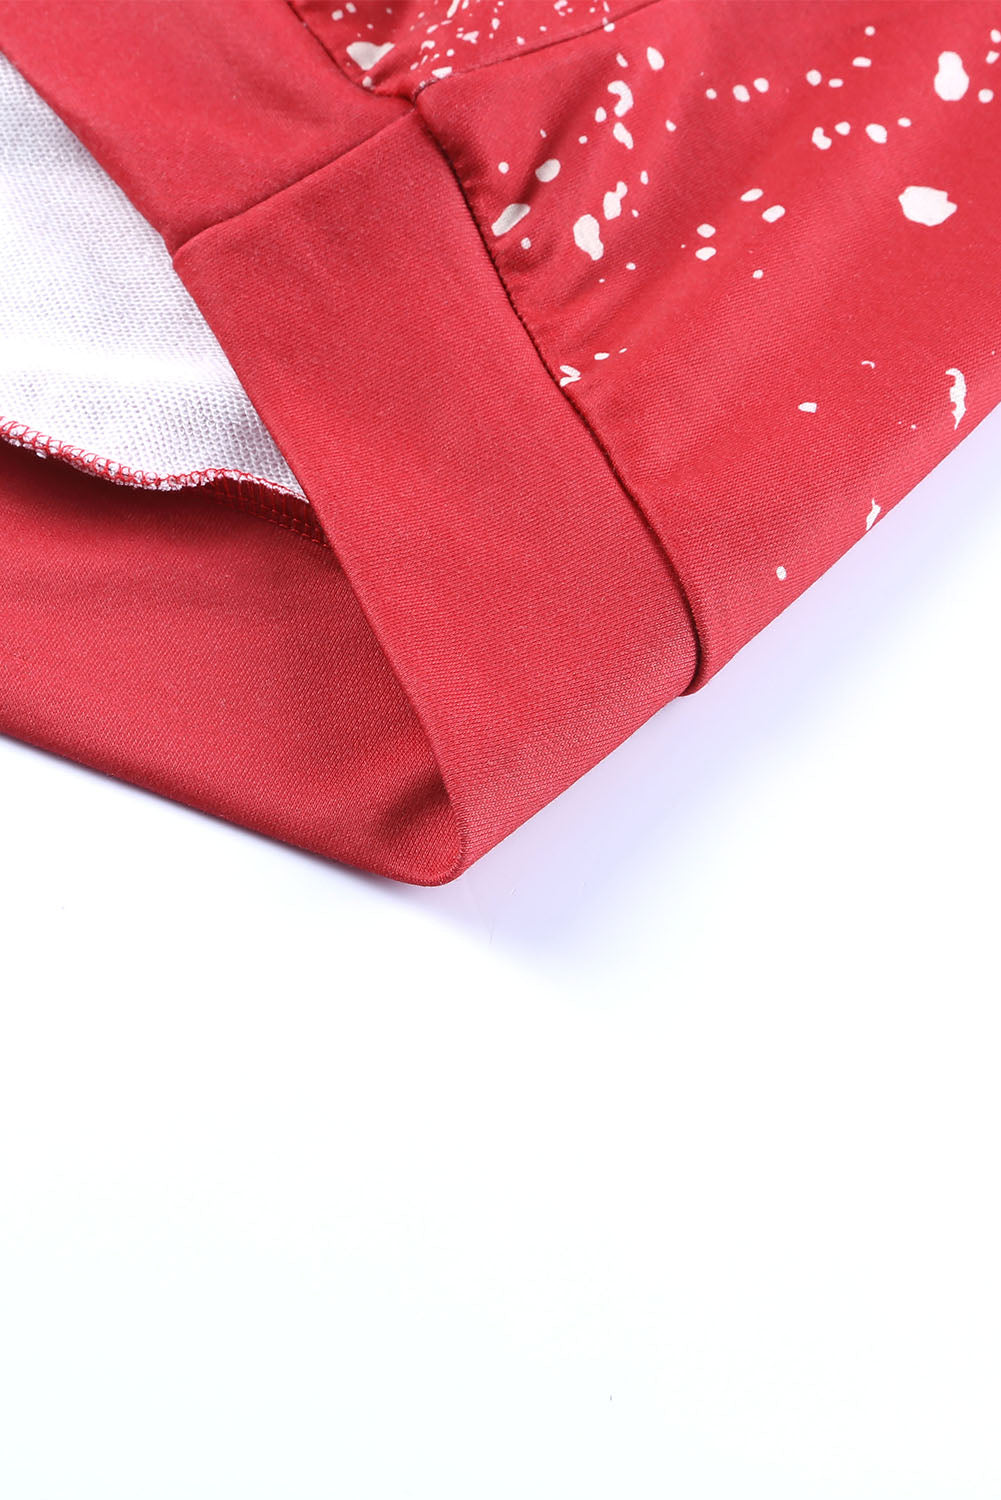 Red Tie Dye Leopard Drop Shoulder Sweatshirt Sweatshirts & Hoodies JT's Designer Fashion